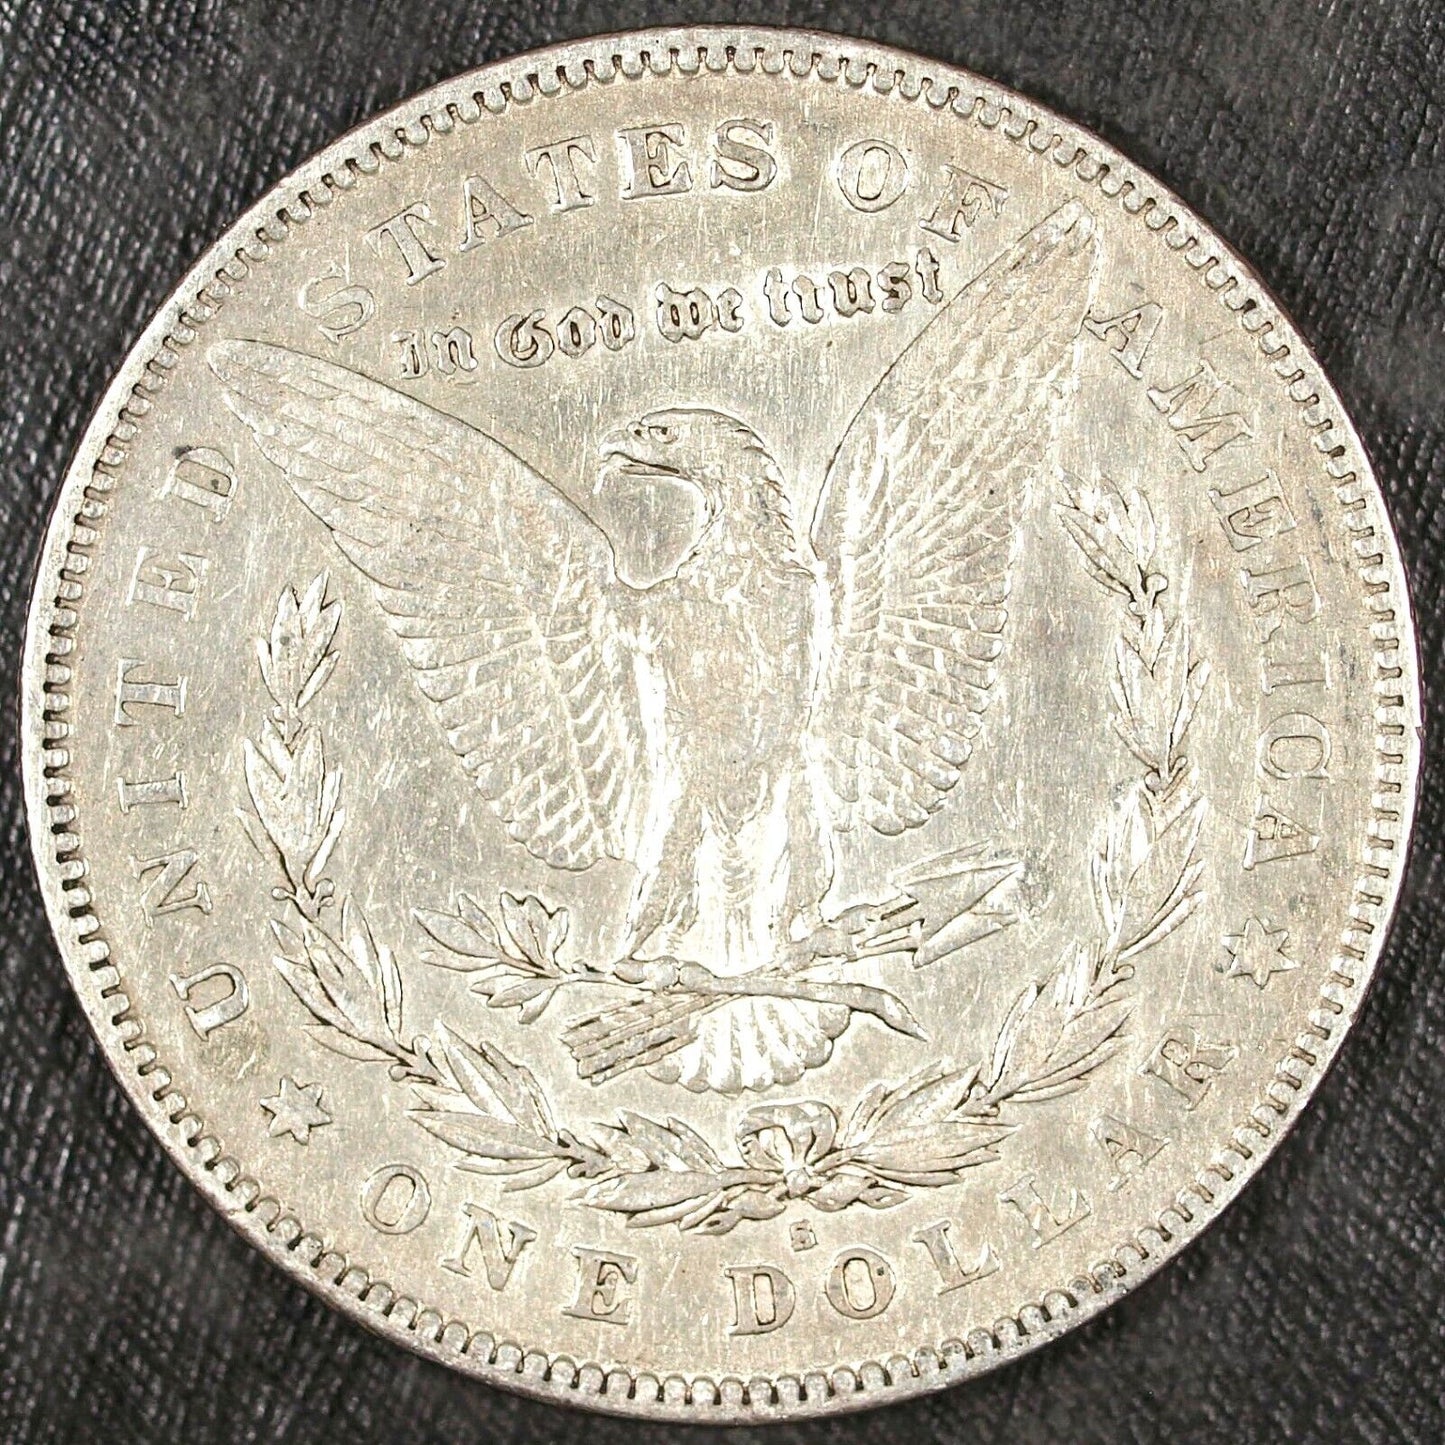 1879 S Reverse of 1878 Morgan Silver Dollar ☆☆ Circulated ☆☆ Great Collectible